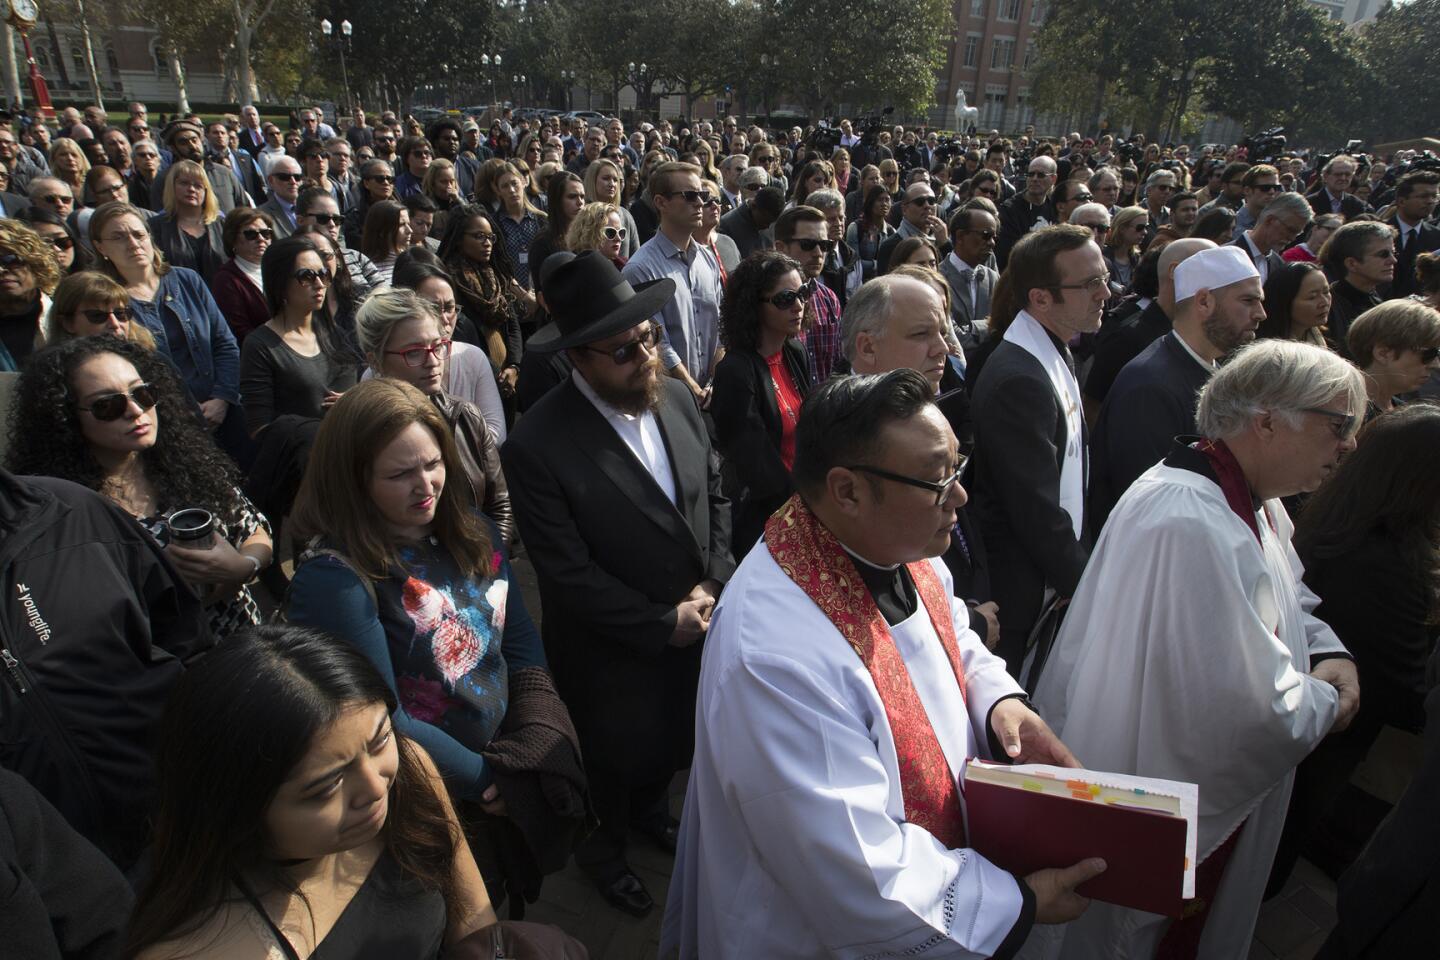 Hundreds of mourners listen to a speaker during a remembrance ceremony honoring slain USCprofessor Bosco Tjan.